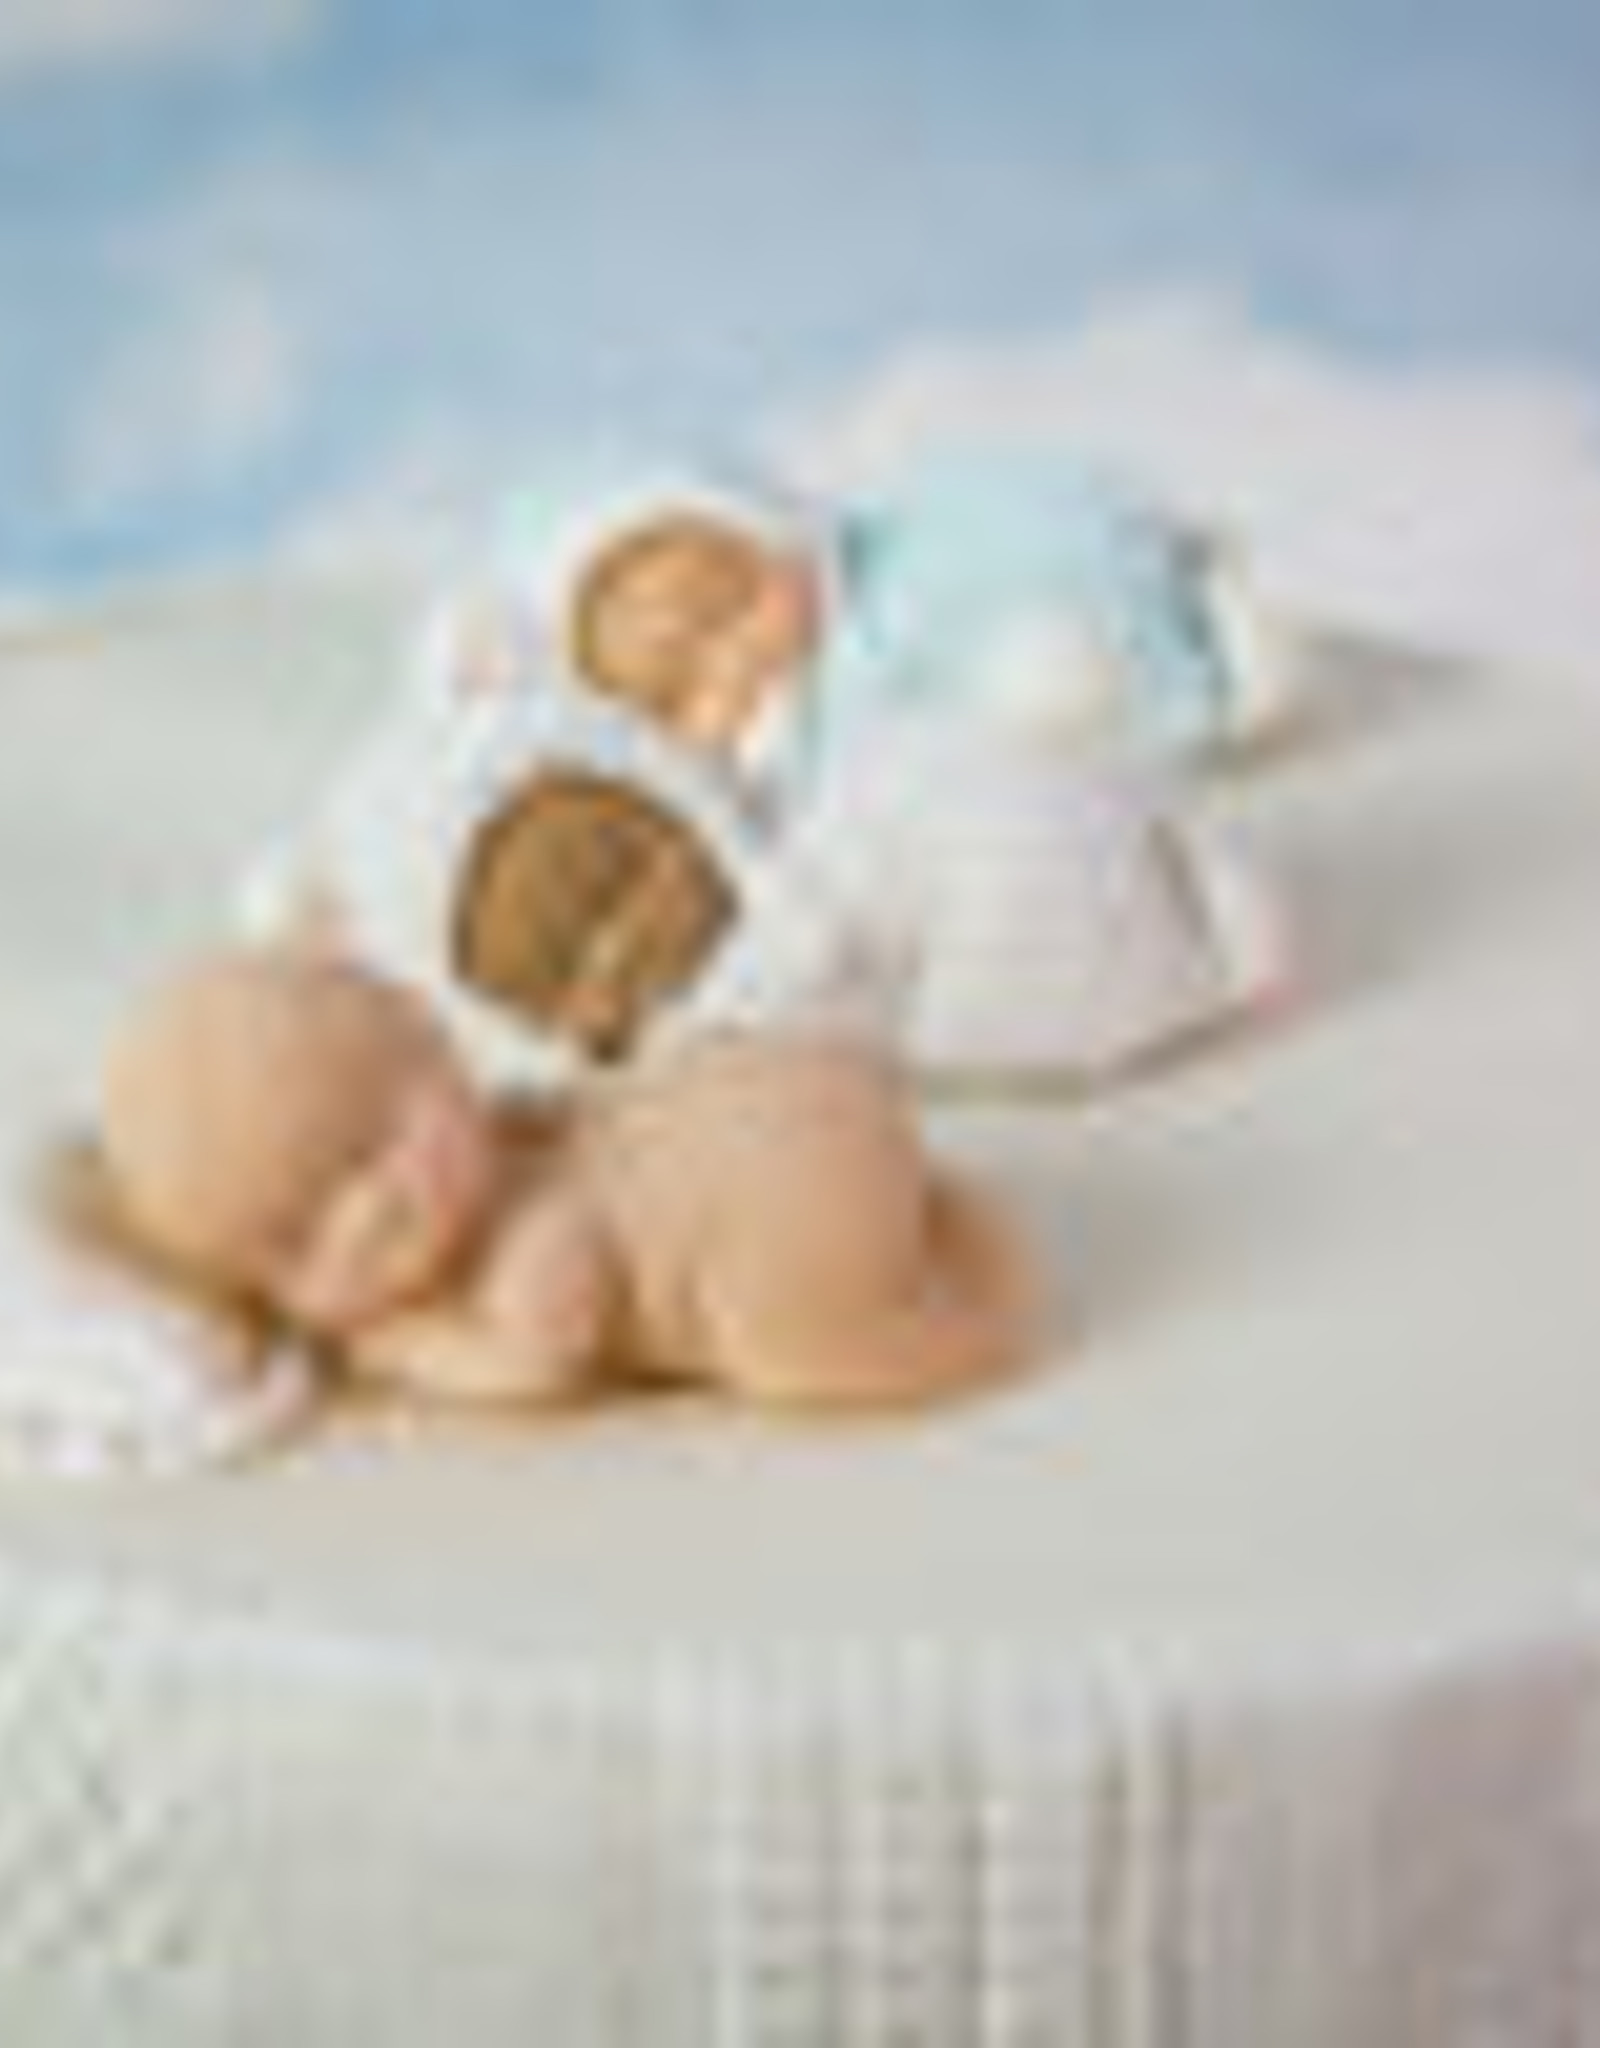 Karen Davies Karen Davies Siliconen Mould - Sleeping Baby & Pillow